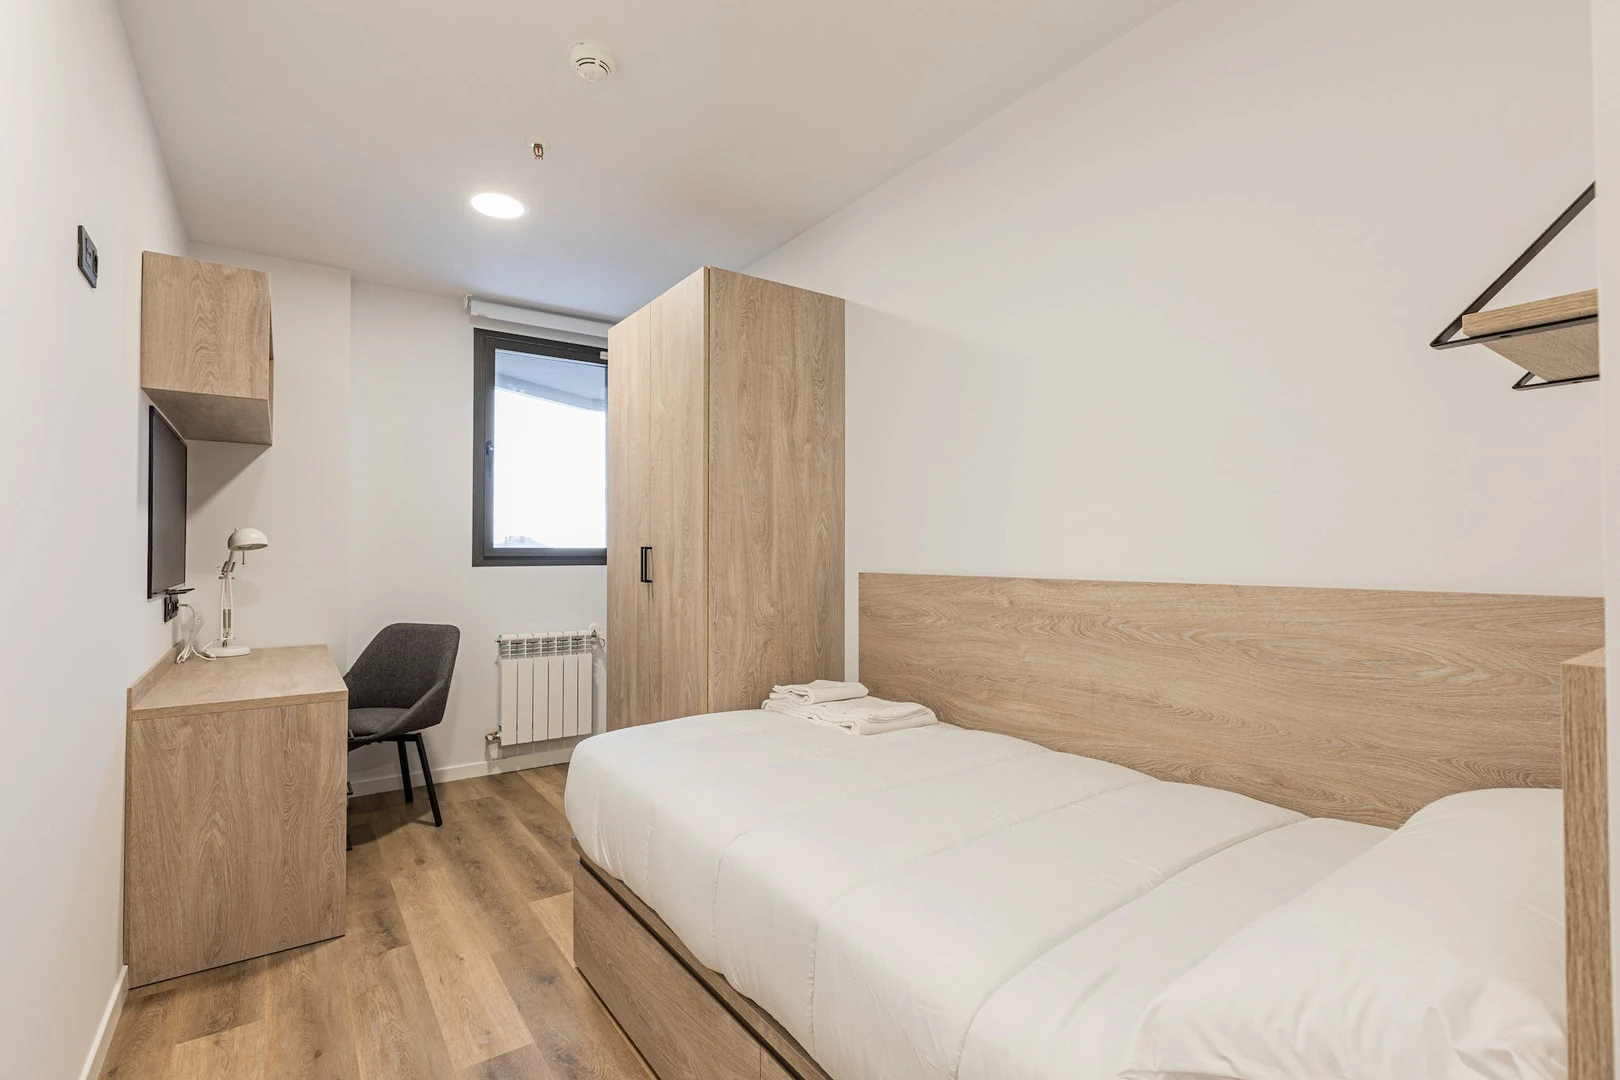 Cheap private room in Santander